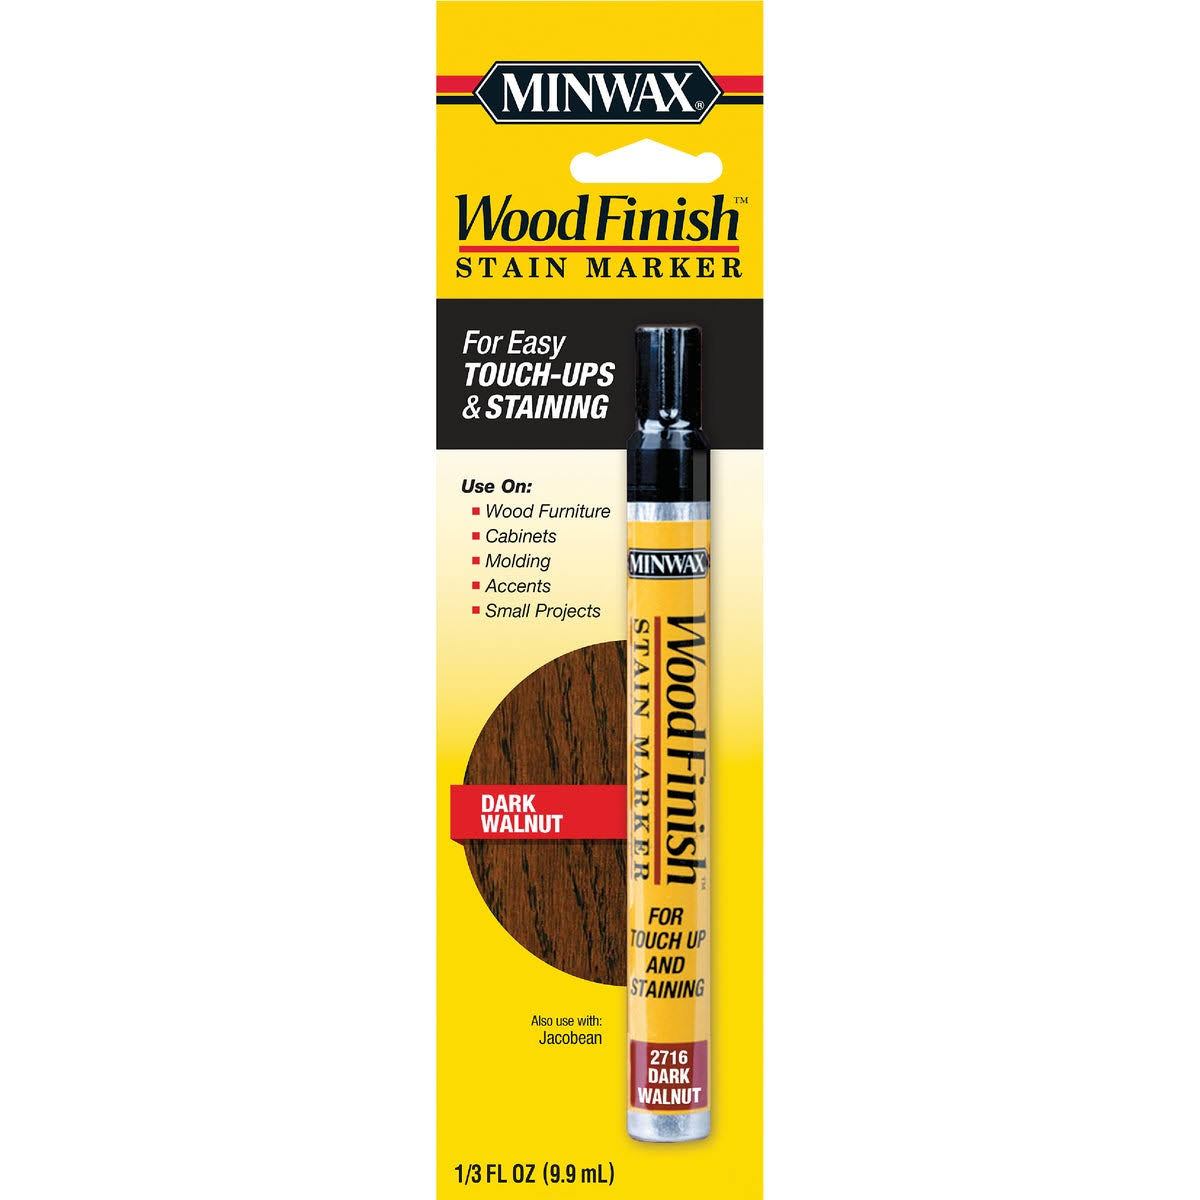 Minwax Wood Finish Stain Marker - Dark Walnut